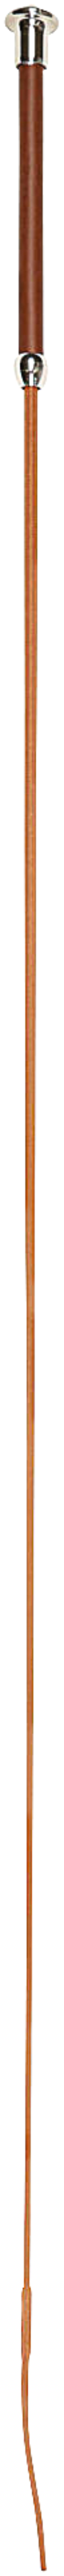 Dressurgerte mit Kunstledergriff, cognac 110 cm